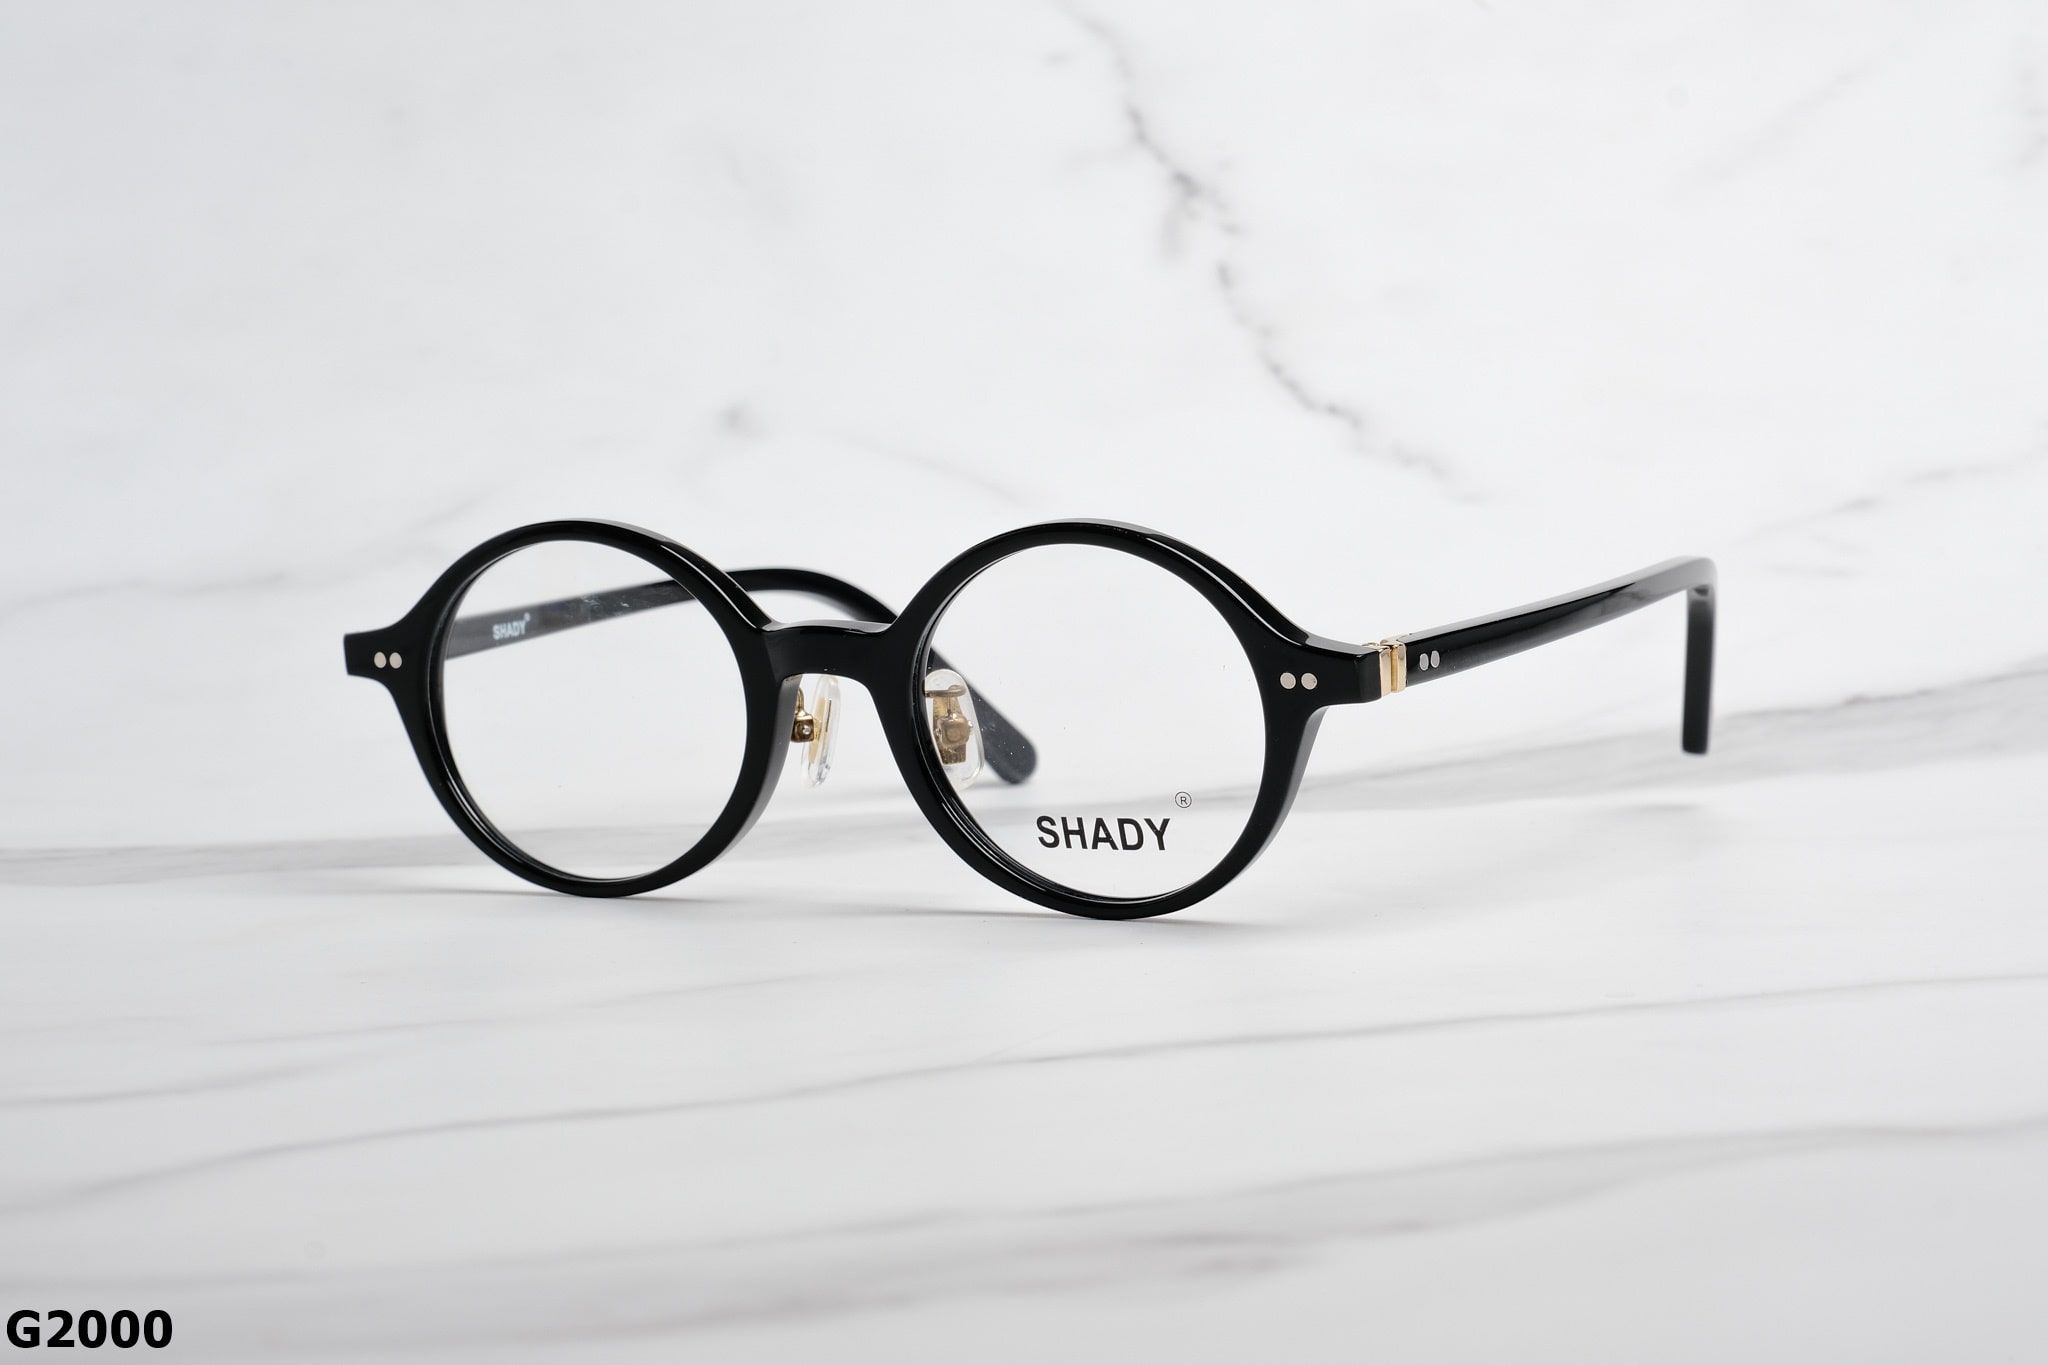  SHADY Eyewear - Glasses - G2000 